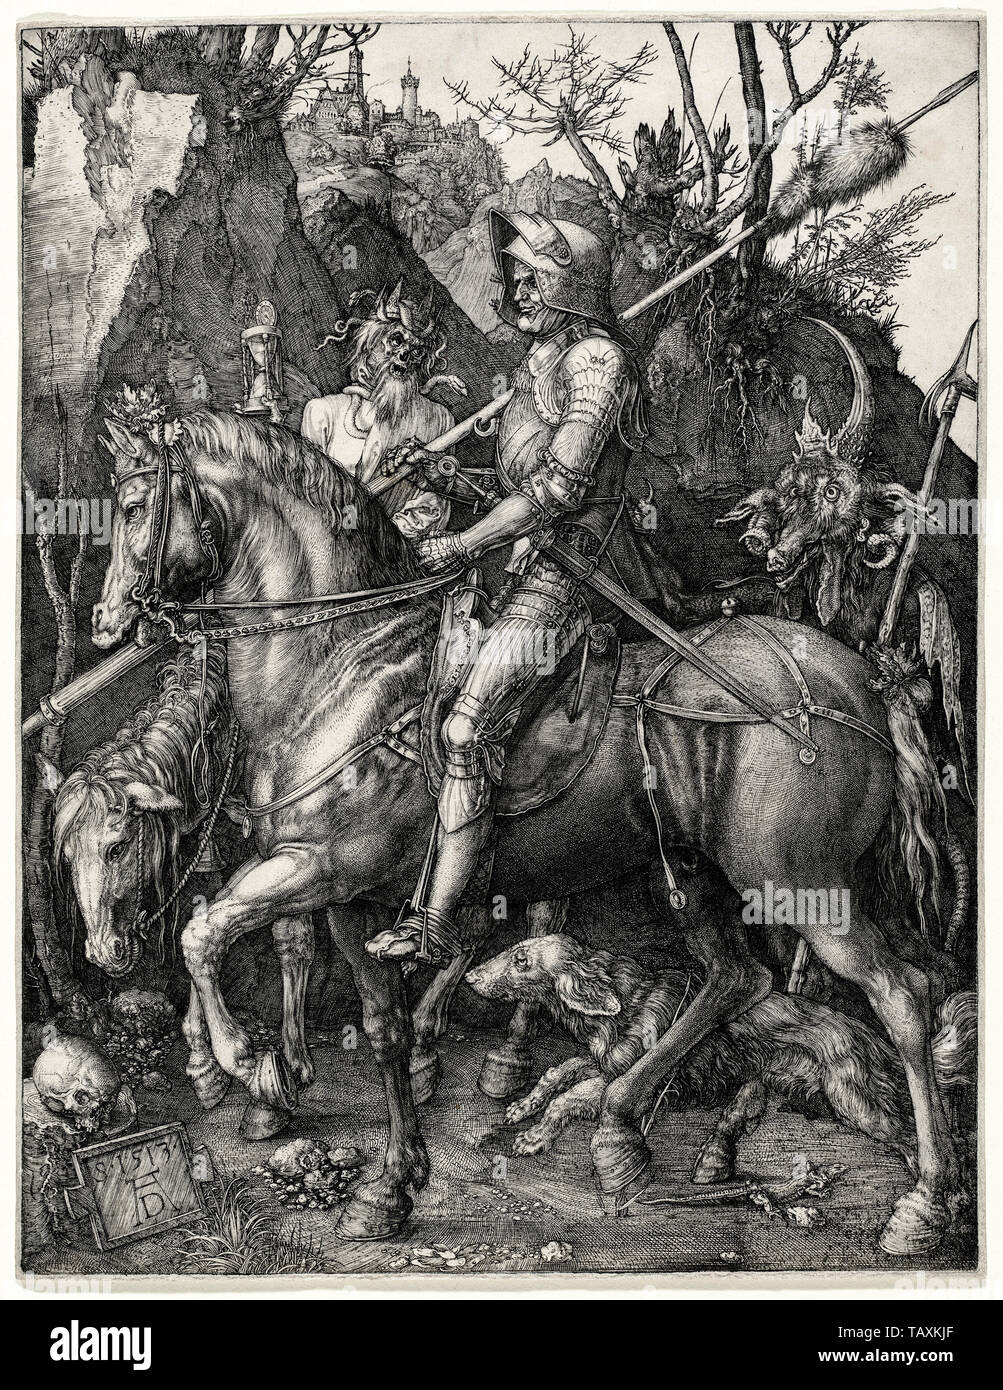 Albrecht Dürer, Knight, Death and the Devil, engraving, 1513 Stock Photo